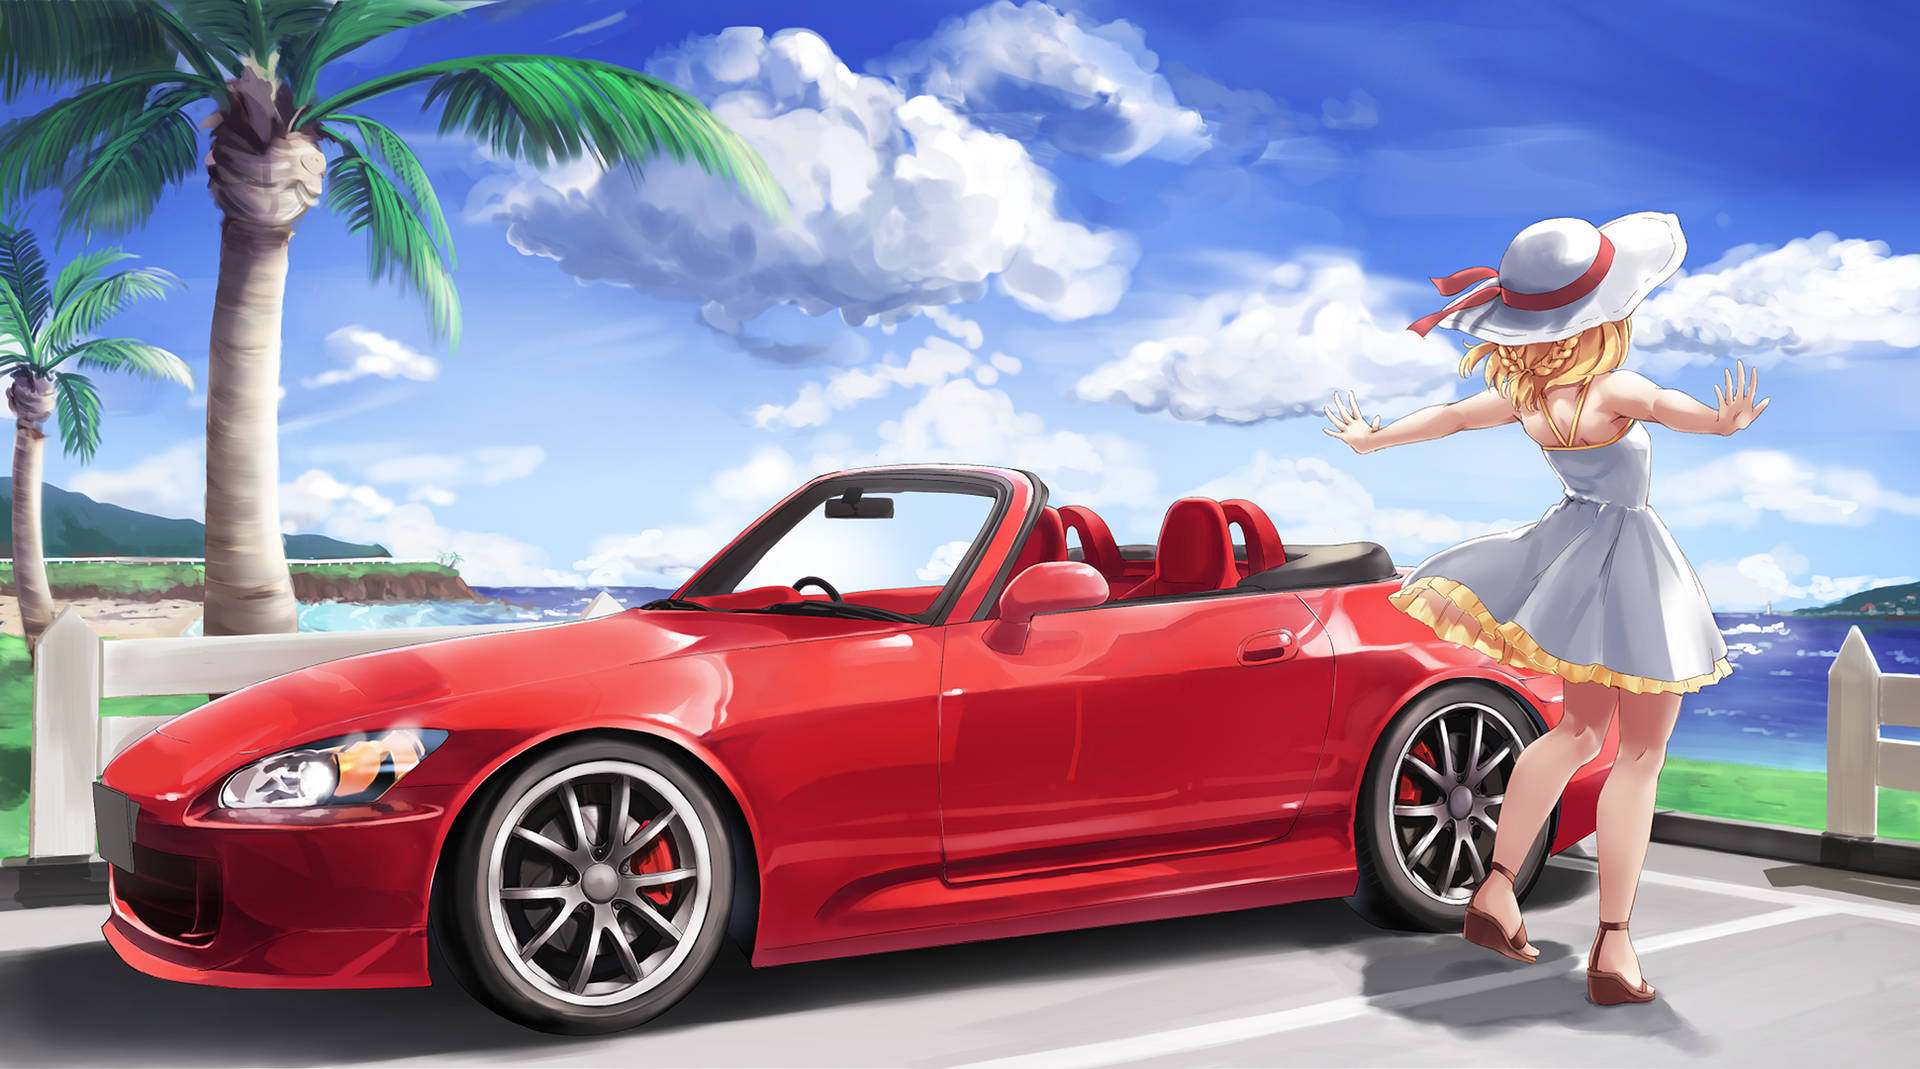 Girl In Summer Dress Next To Car Anime Wallpaper